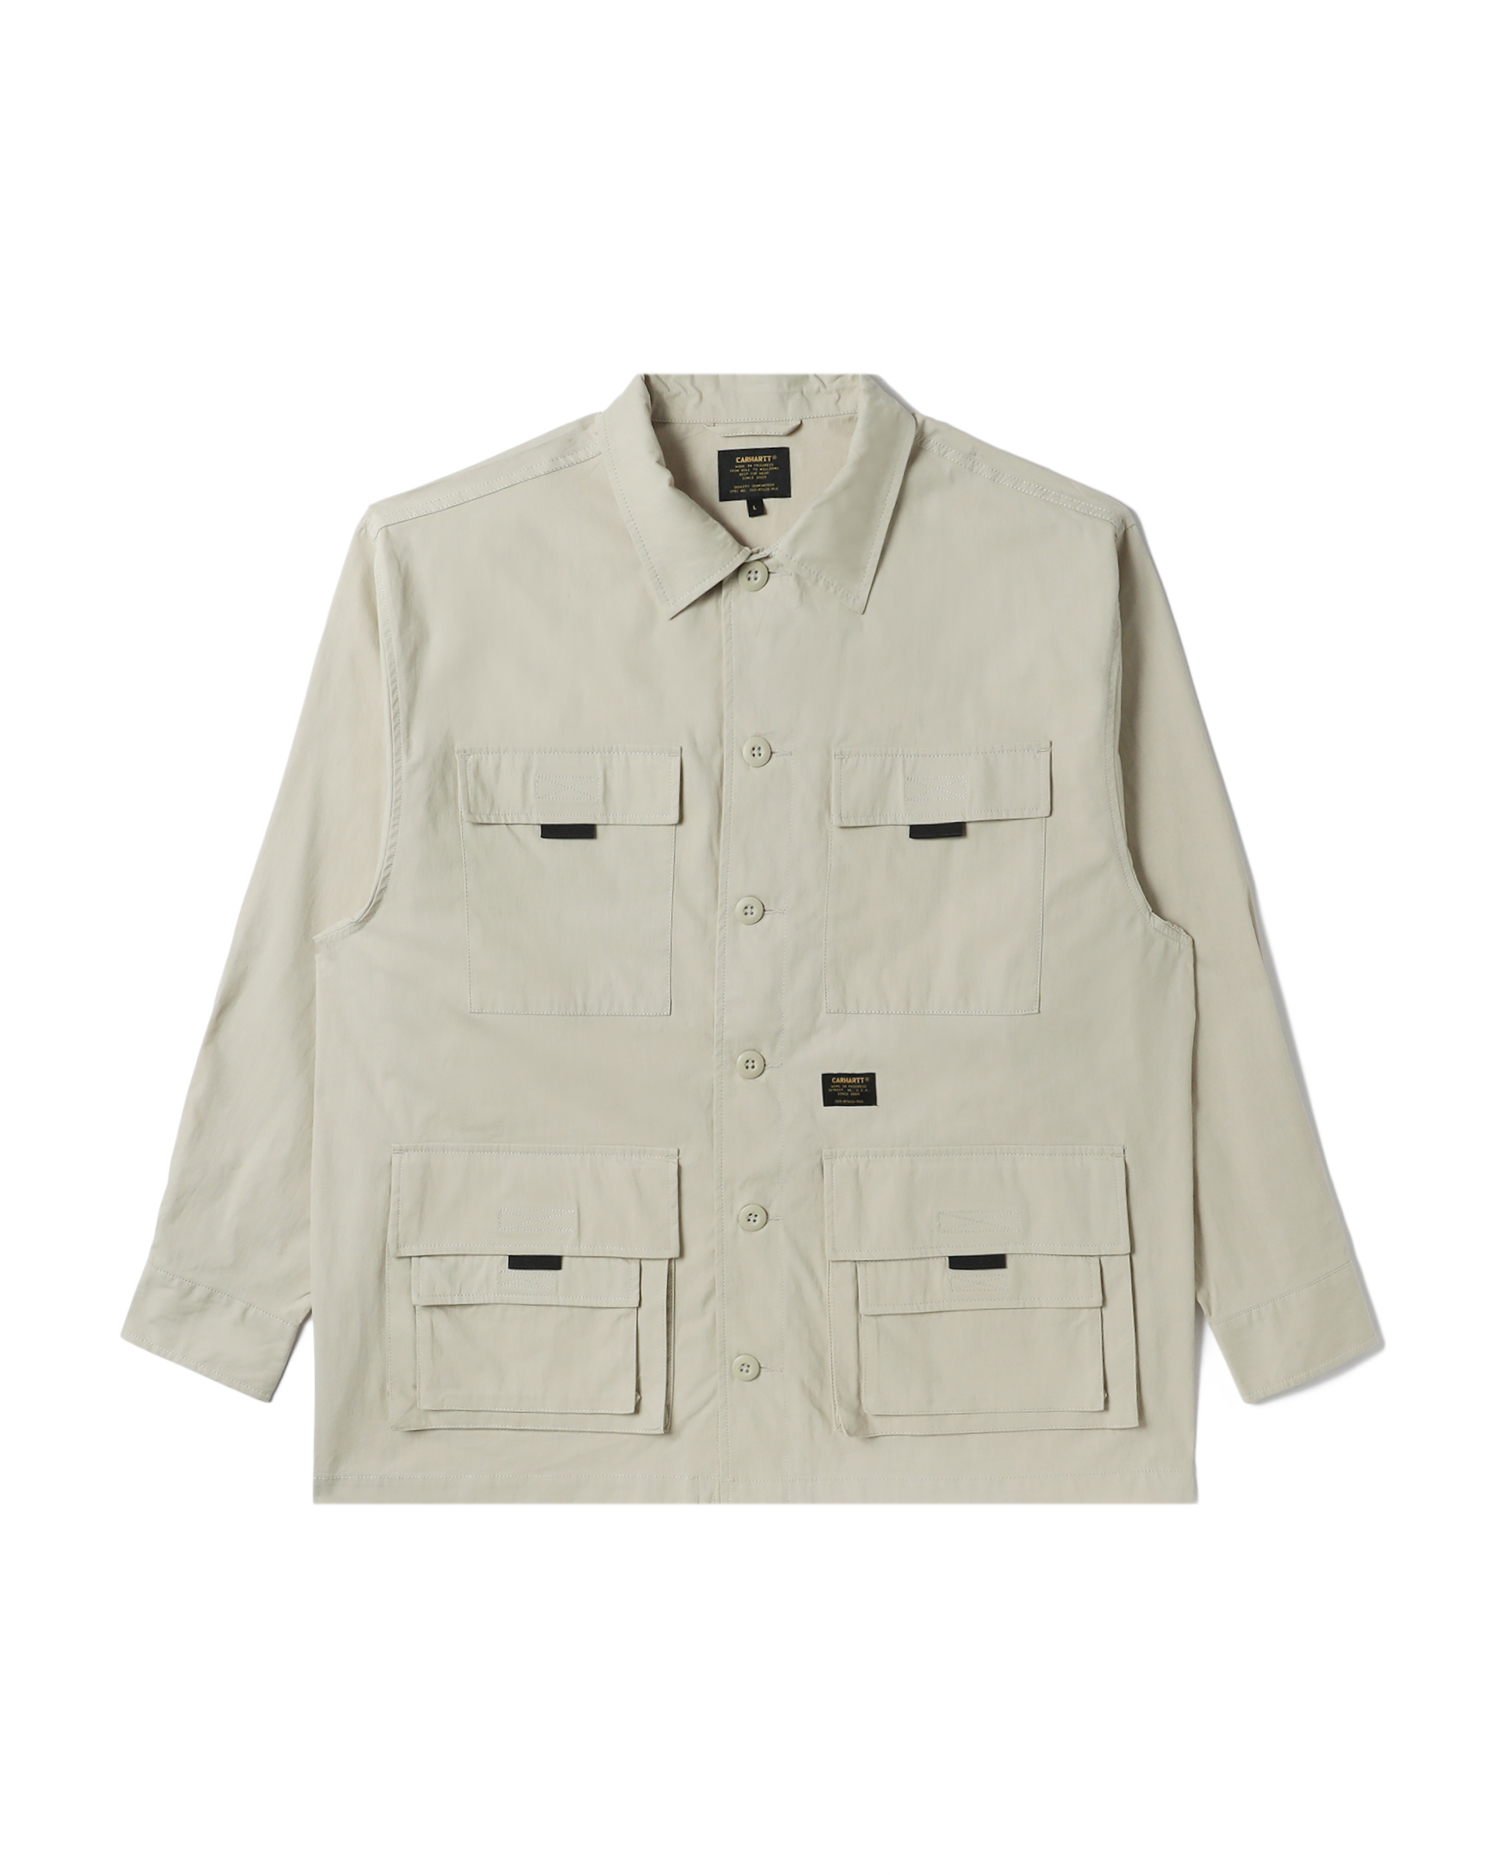 CARHARTT WIP Tristan shirt jacket | ITeSHOP